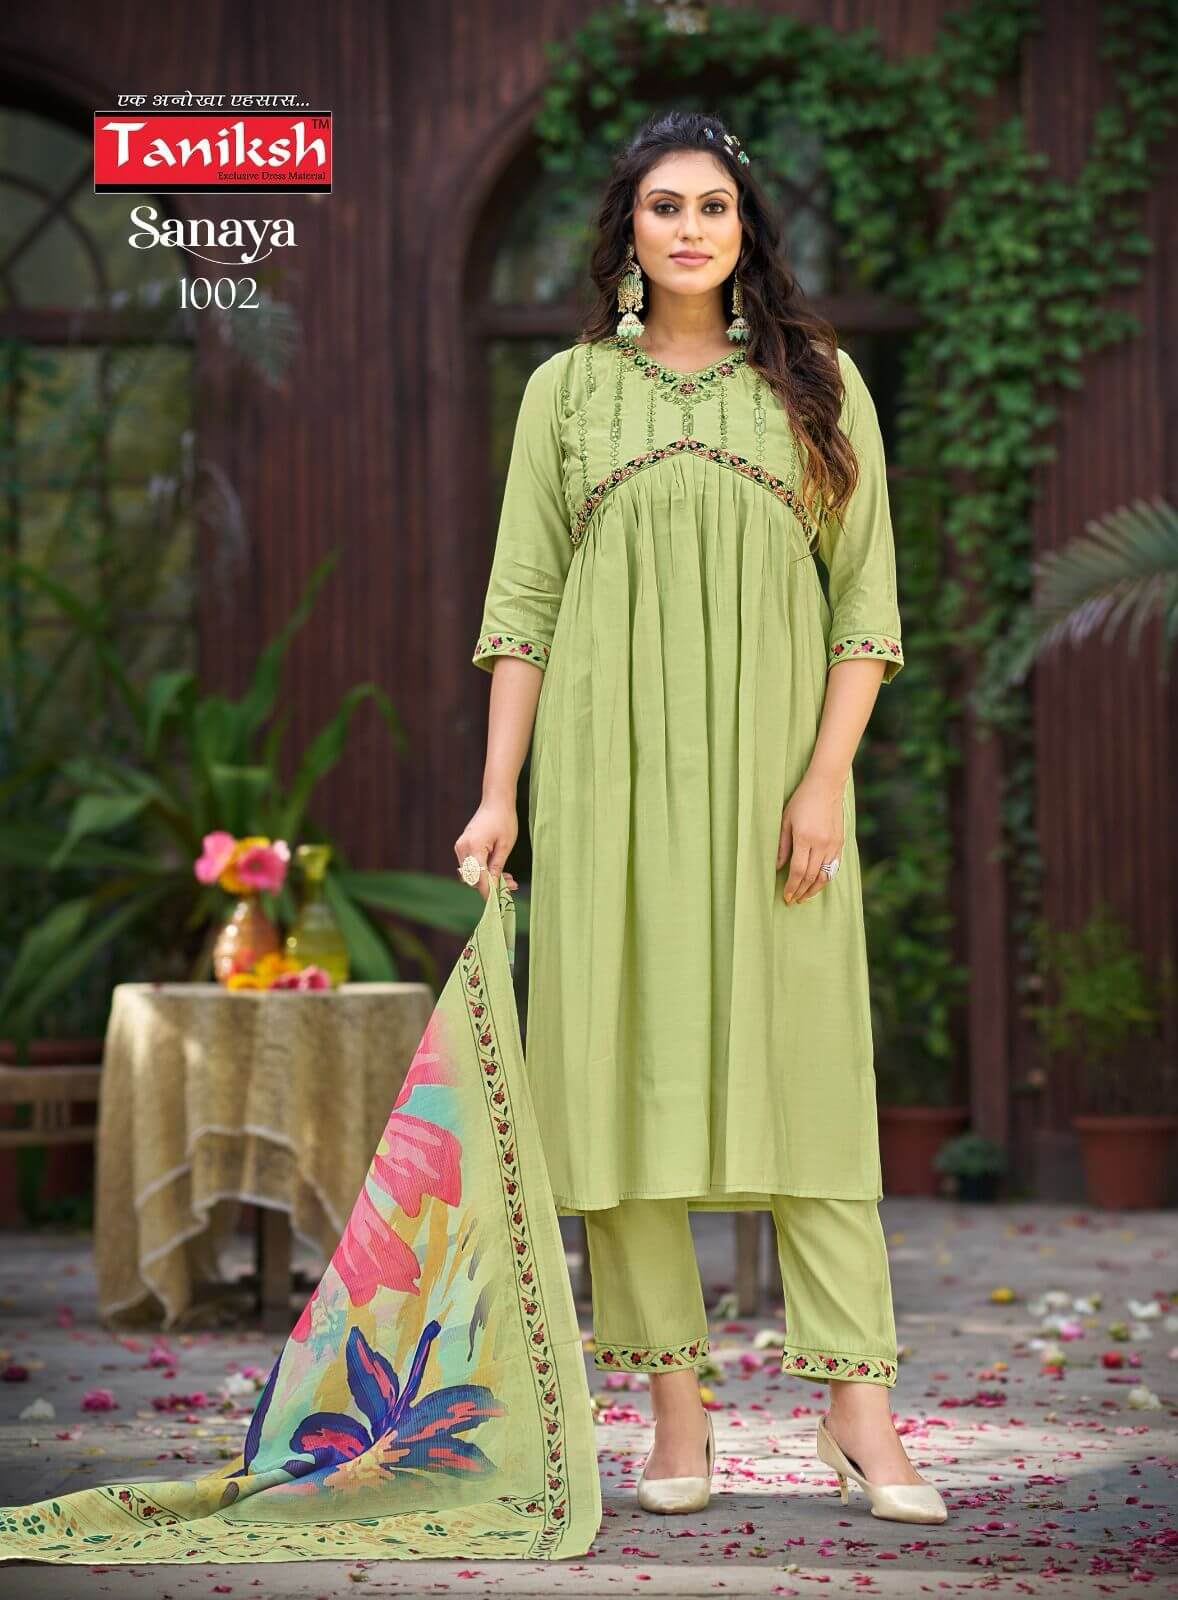 Taniksh Sanaya Vol 1 Alia Cut Readymade Dress Catalog collection 1